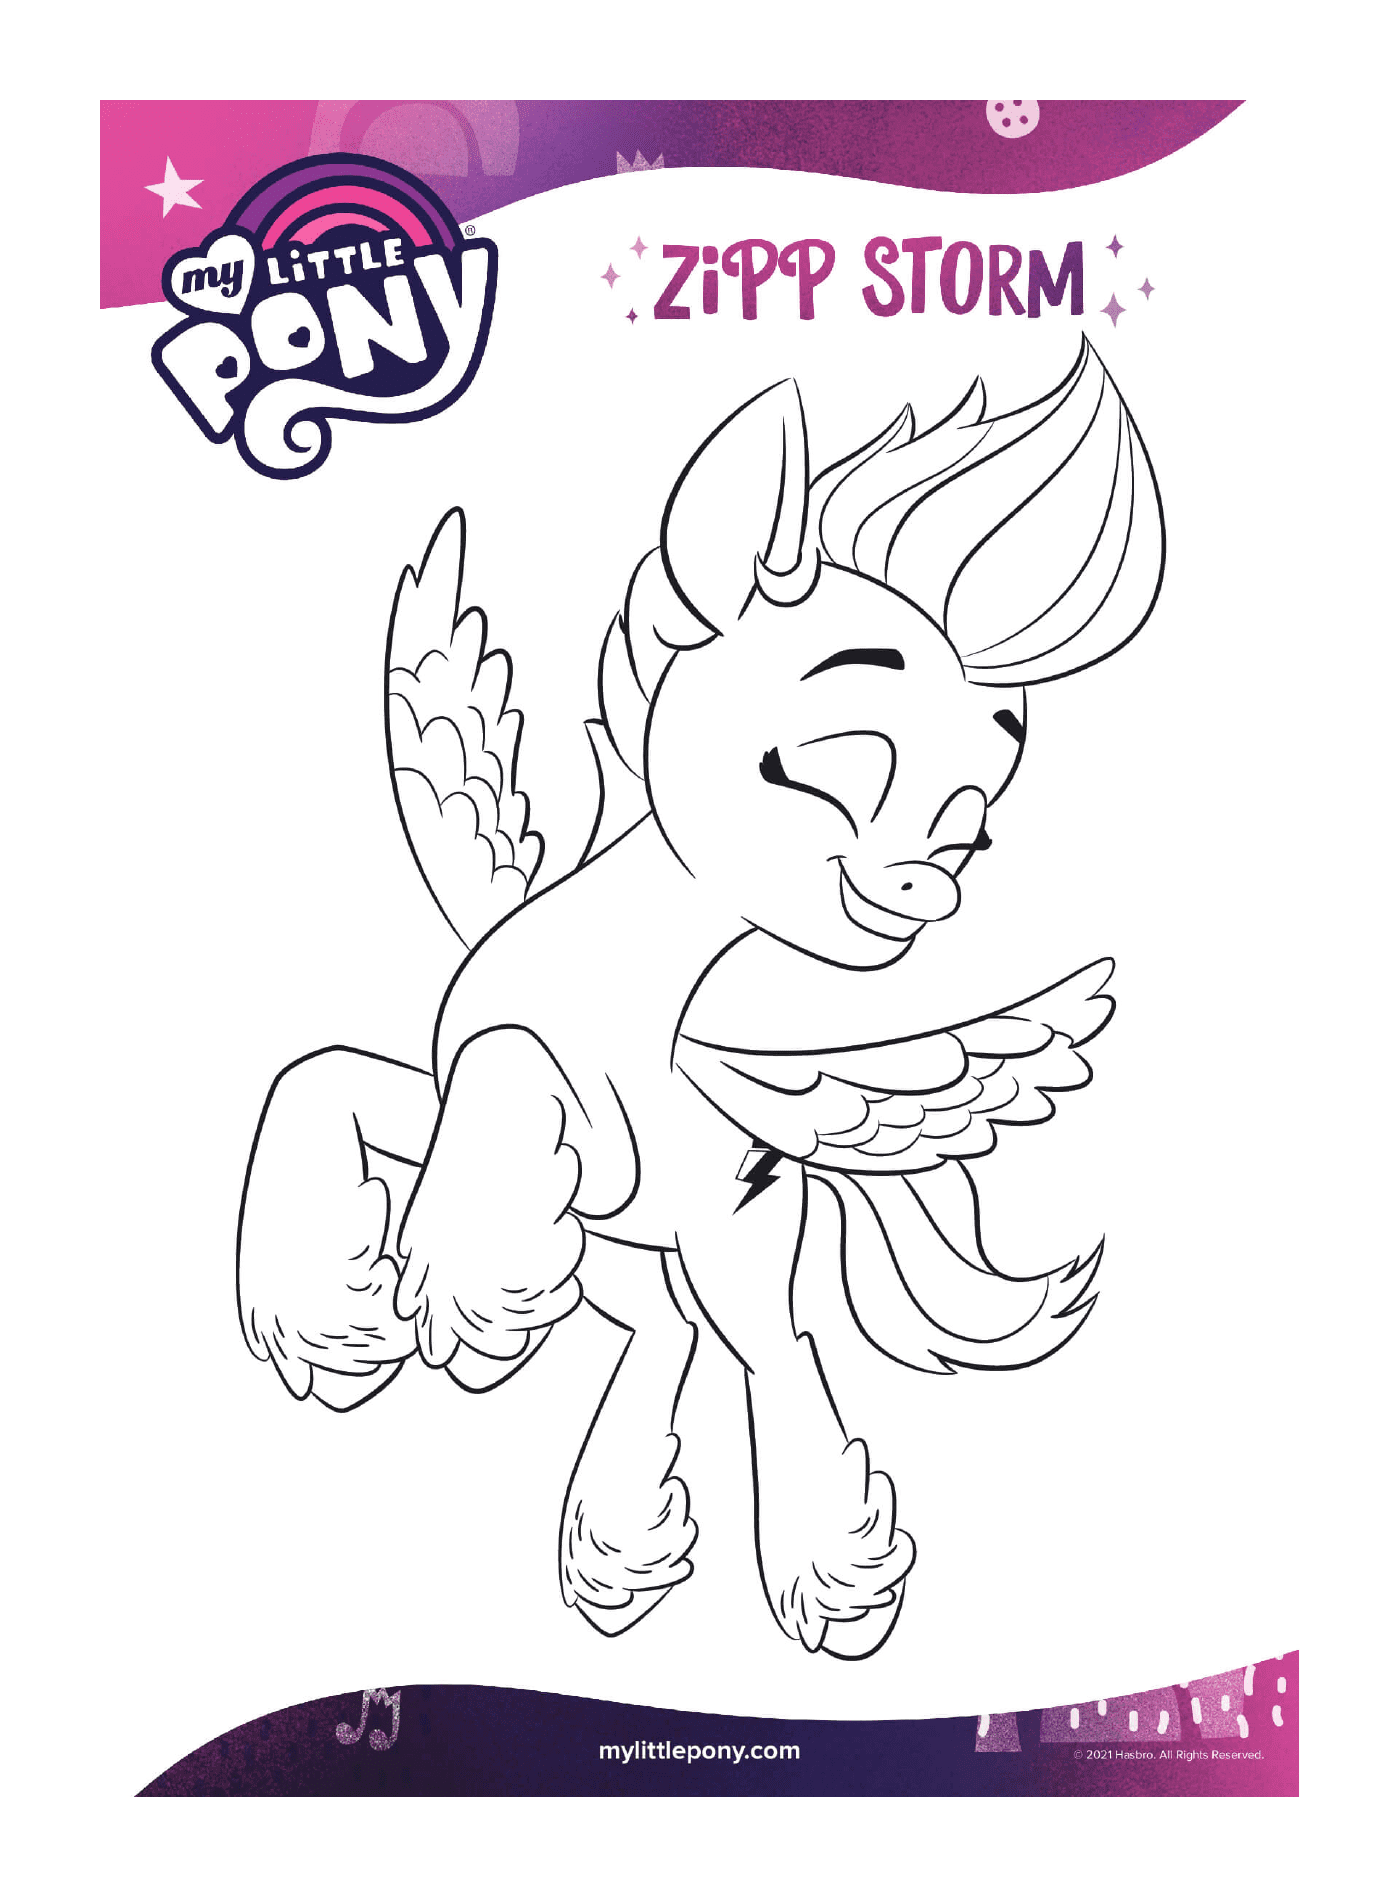  Tormenta Zipp, adorable pony rebelde 